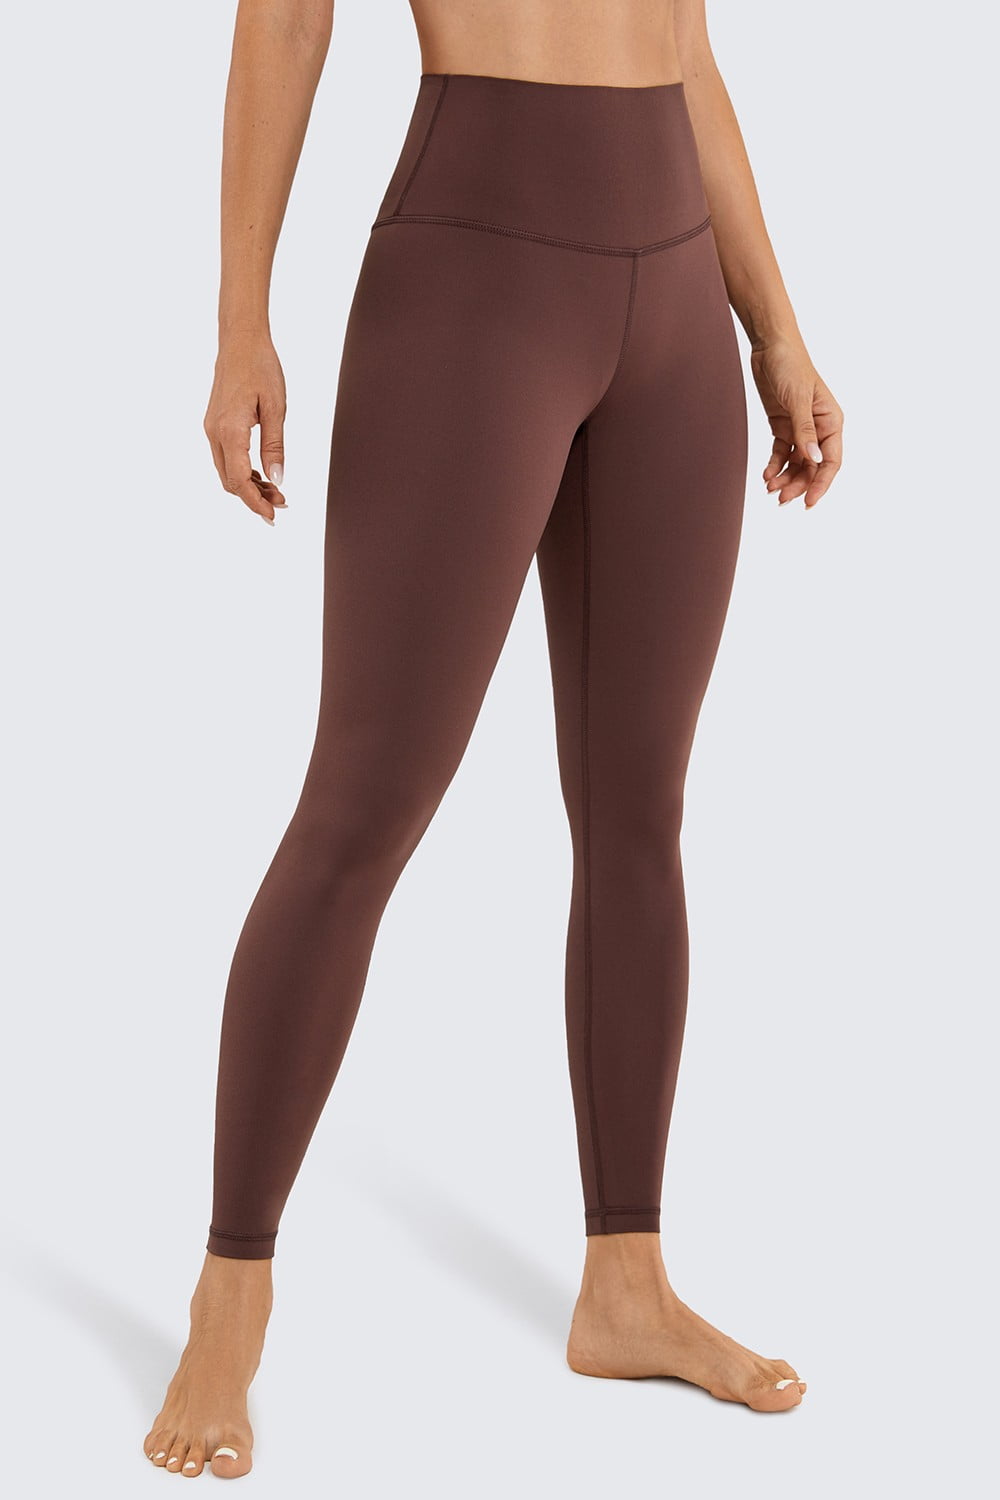 Chocolate Sweet Donut Dessert High Waist Yoga Pants with Pockets for Women  Stretch Leggings XL, Leggings -  Canada